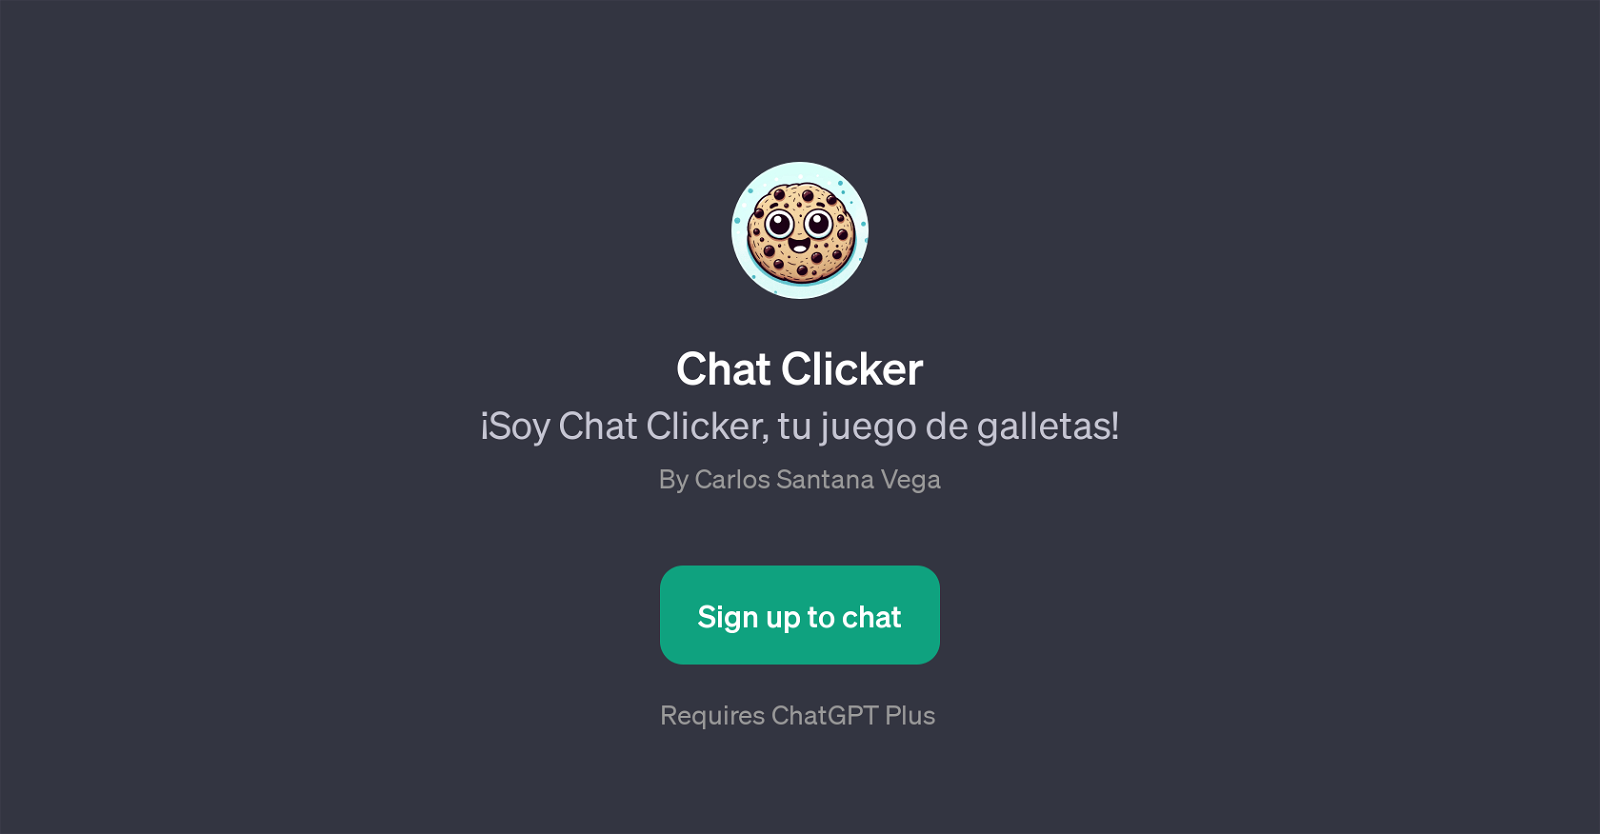 Chat Clicker website